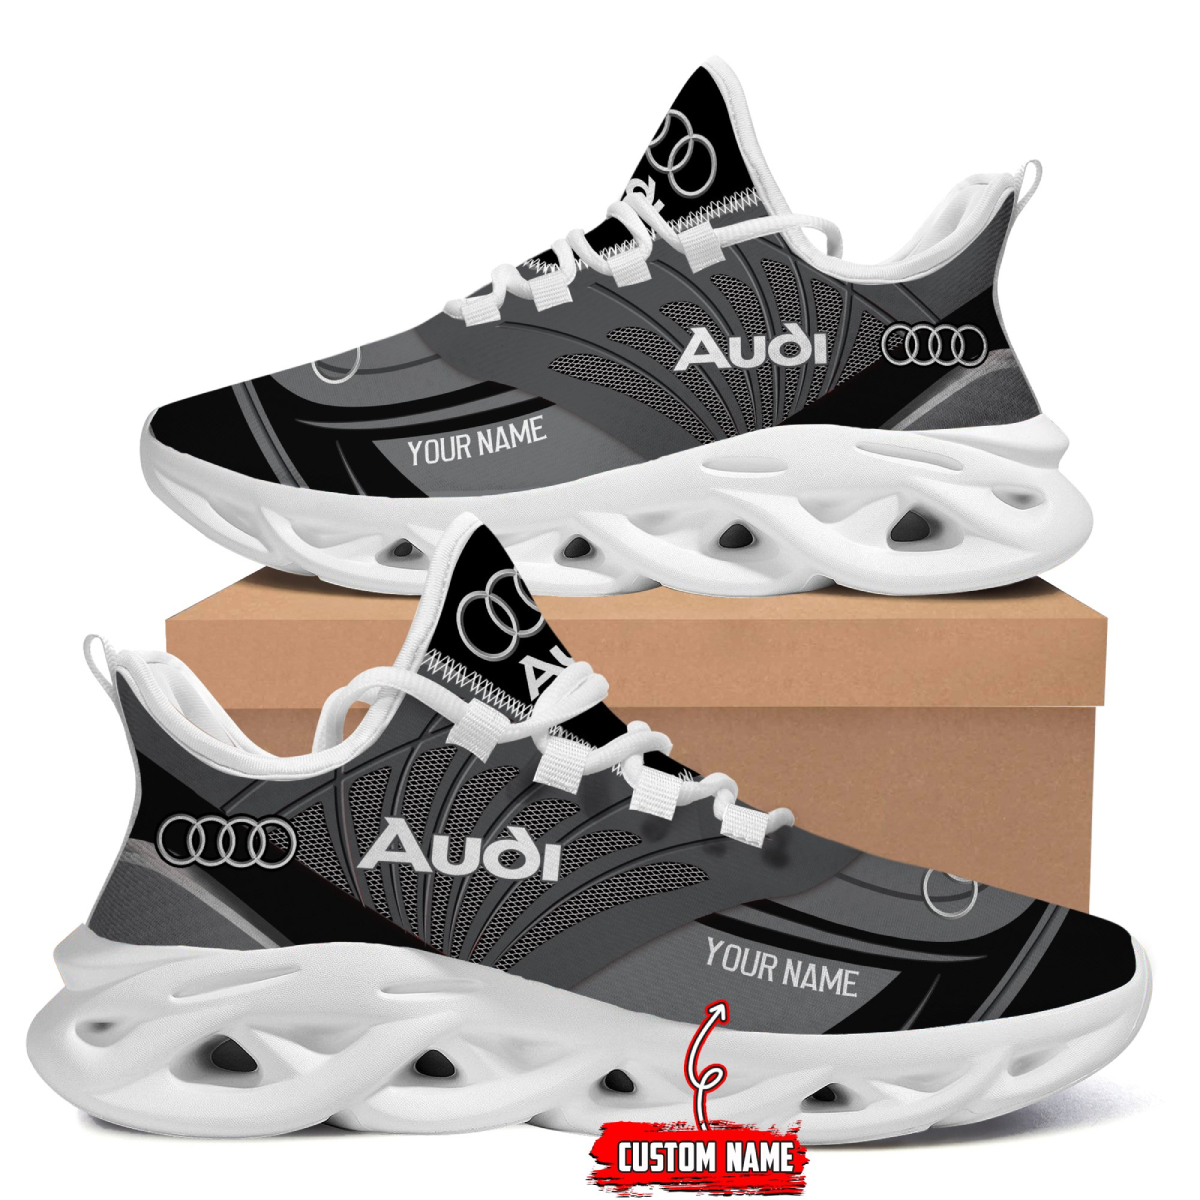 Audi Custom Name Hey Dude Shoes - Torunstyle